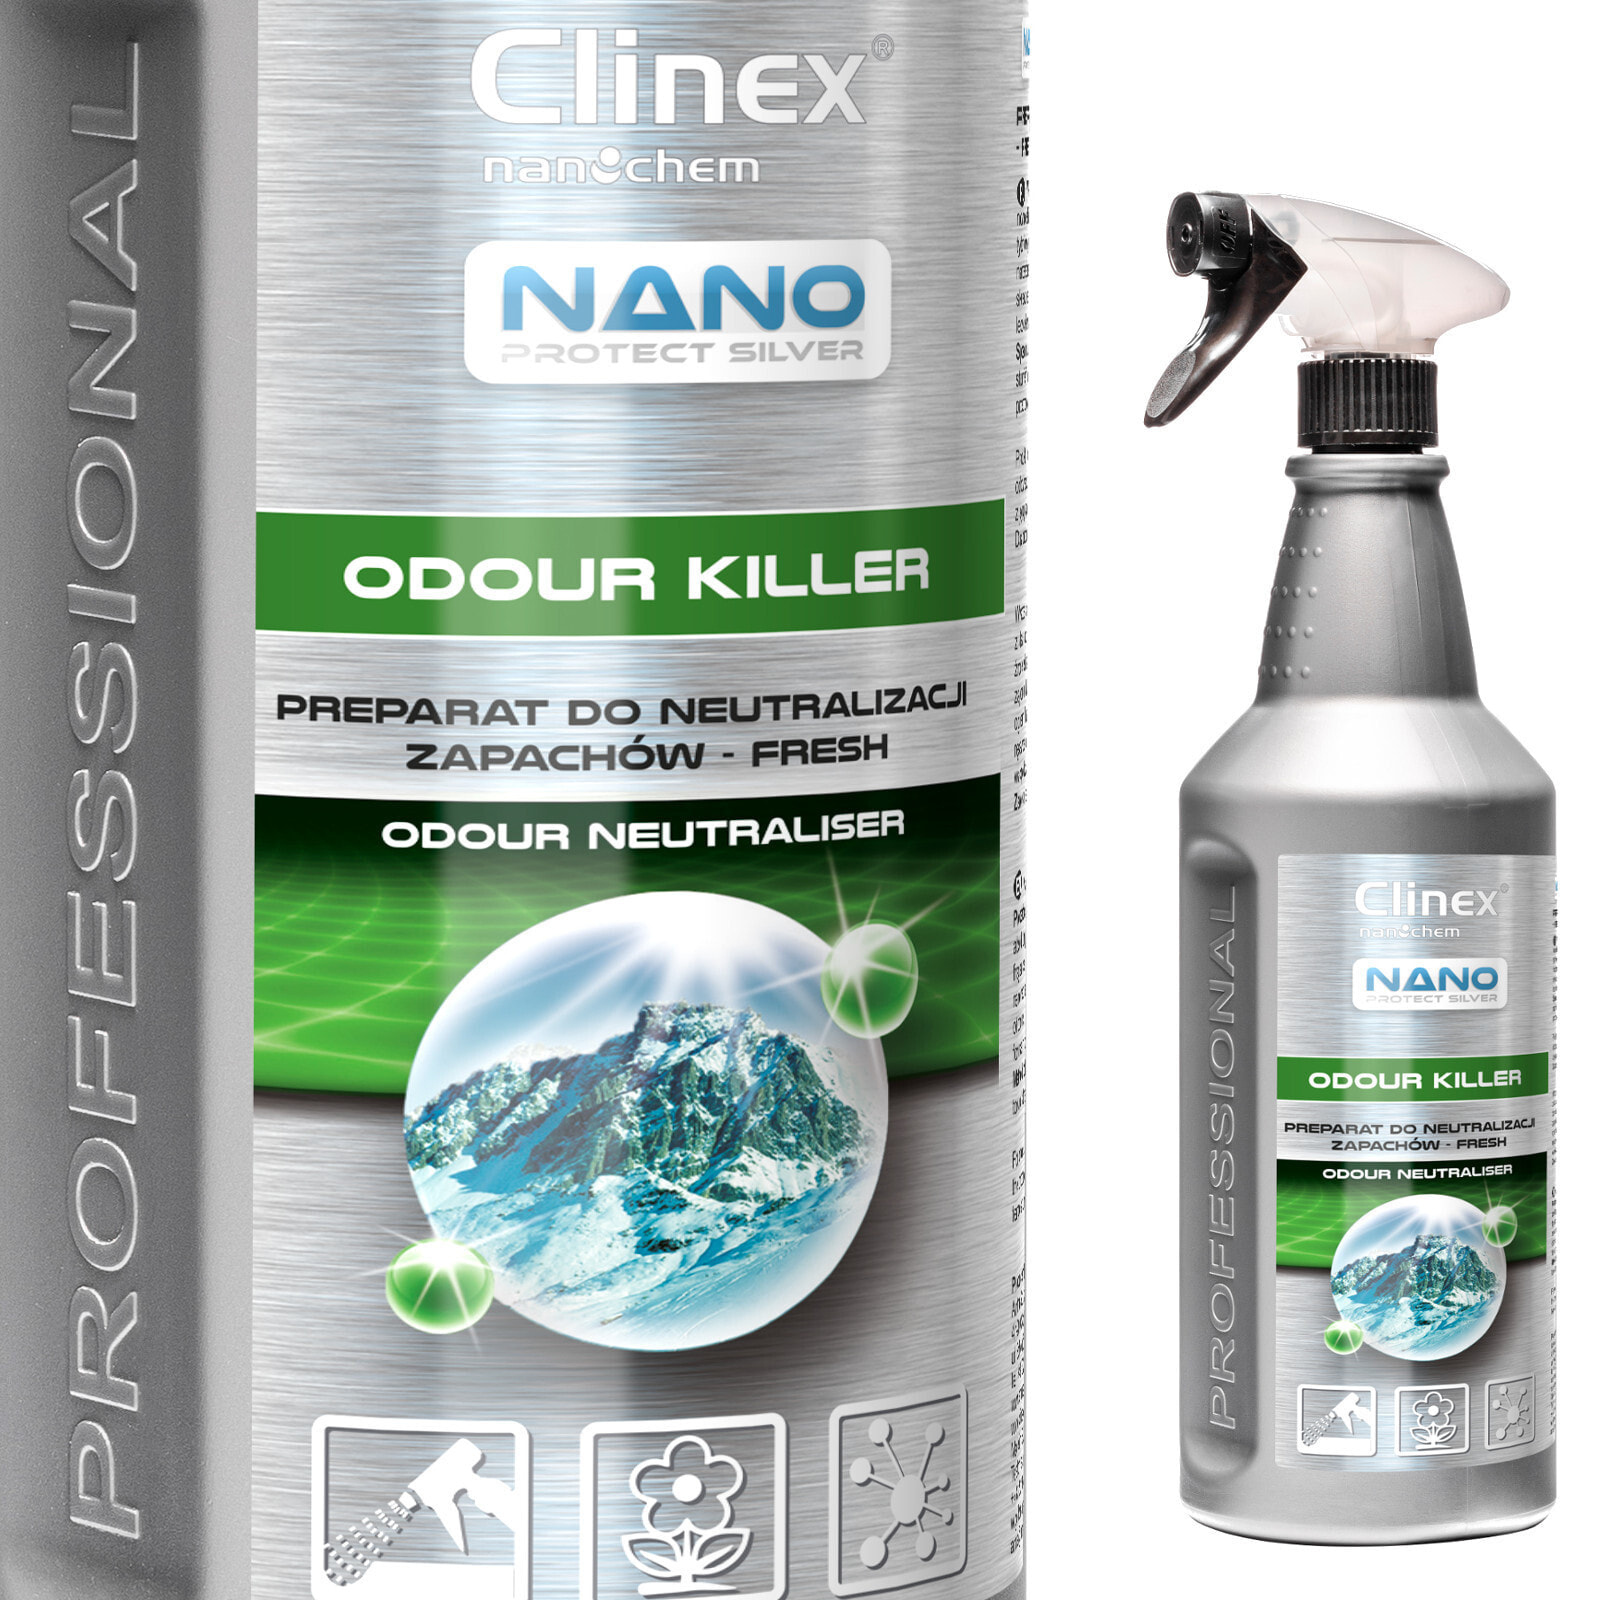 Air freshener for neutralizing odors CLINEX Nano Protect Silver Odor Killer - Fresh 1L